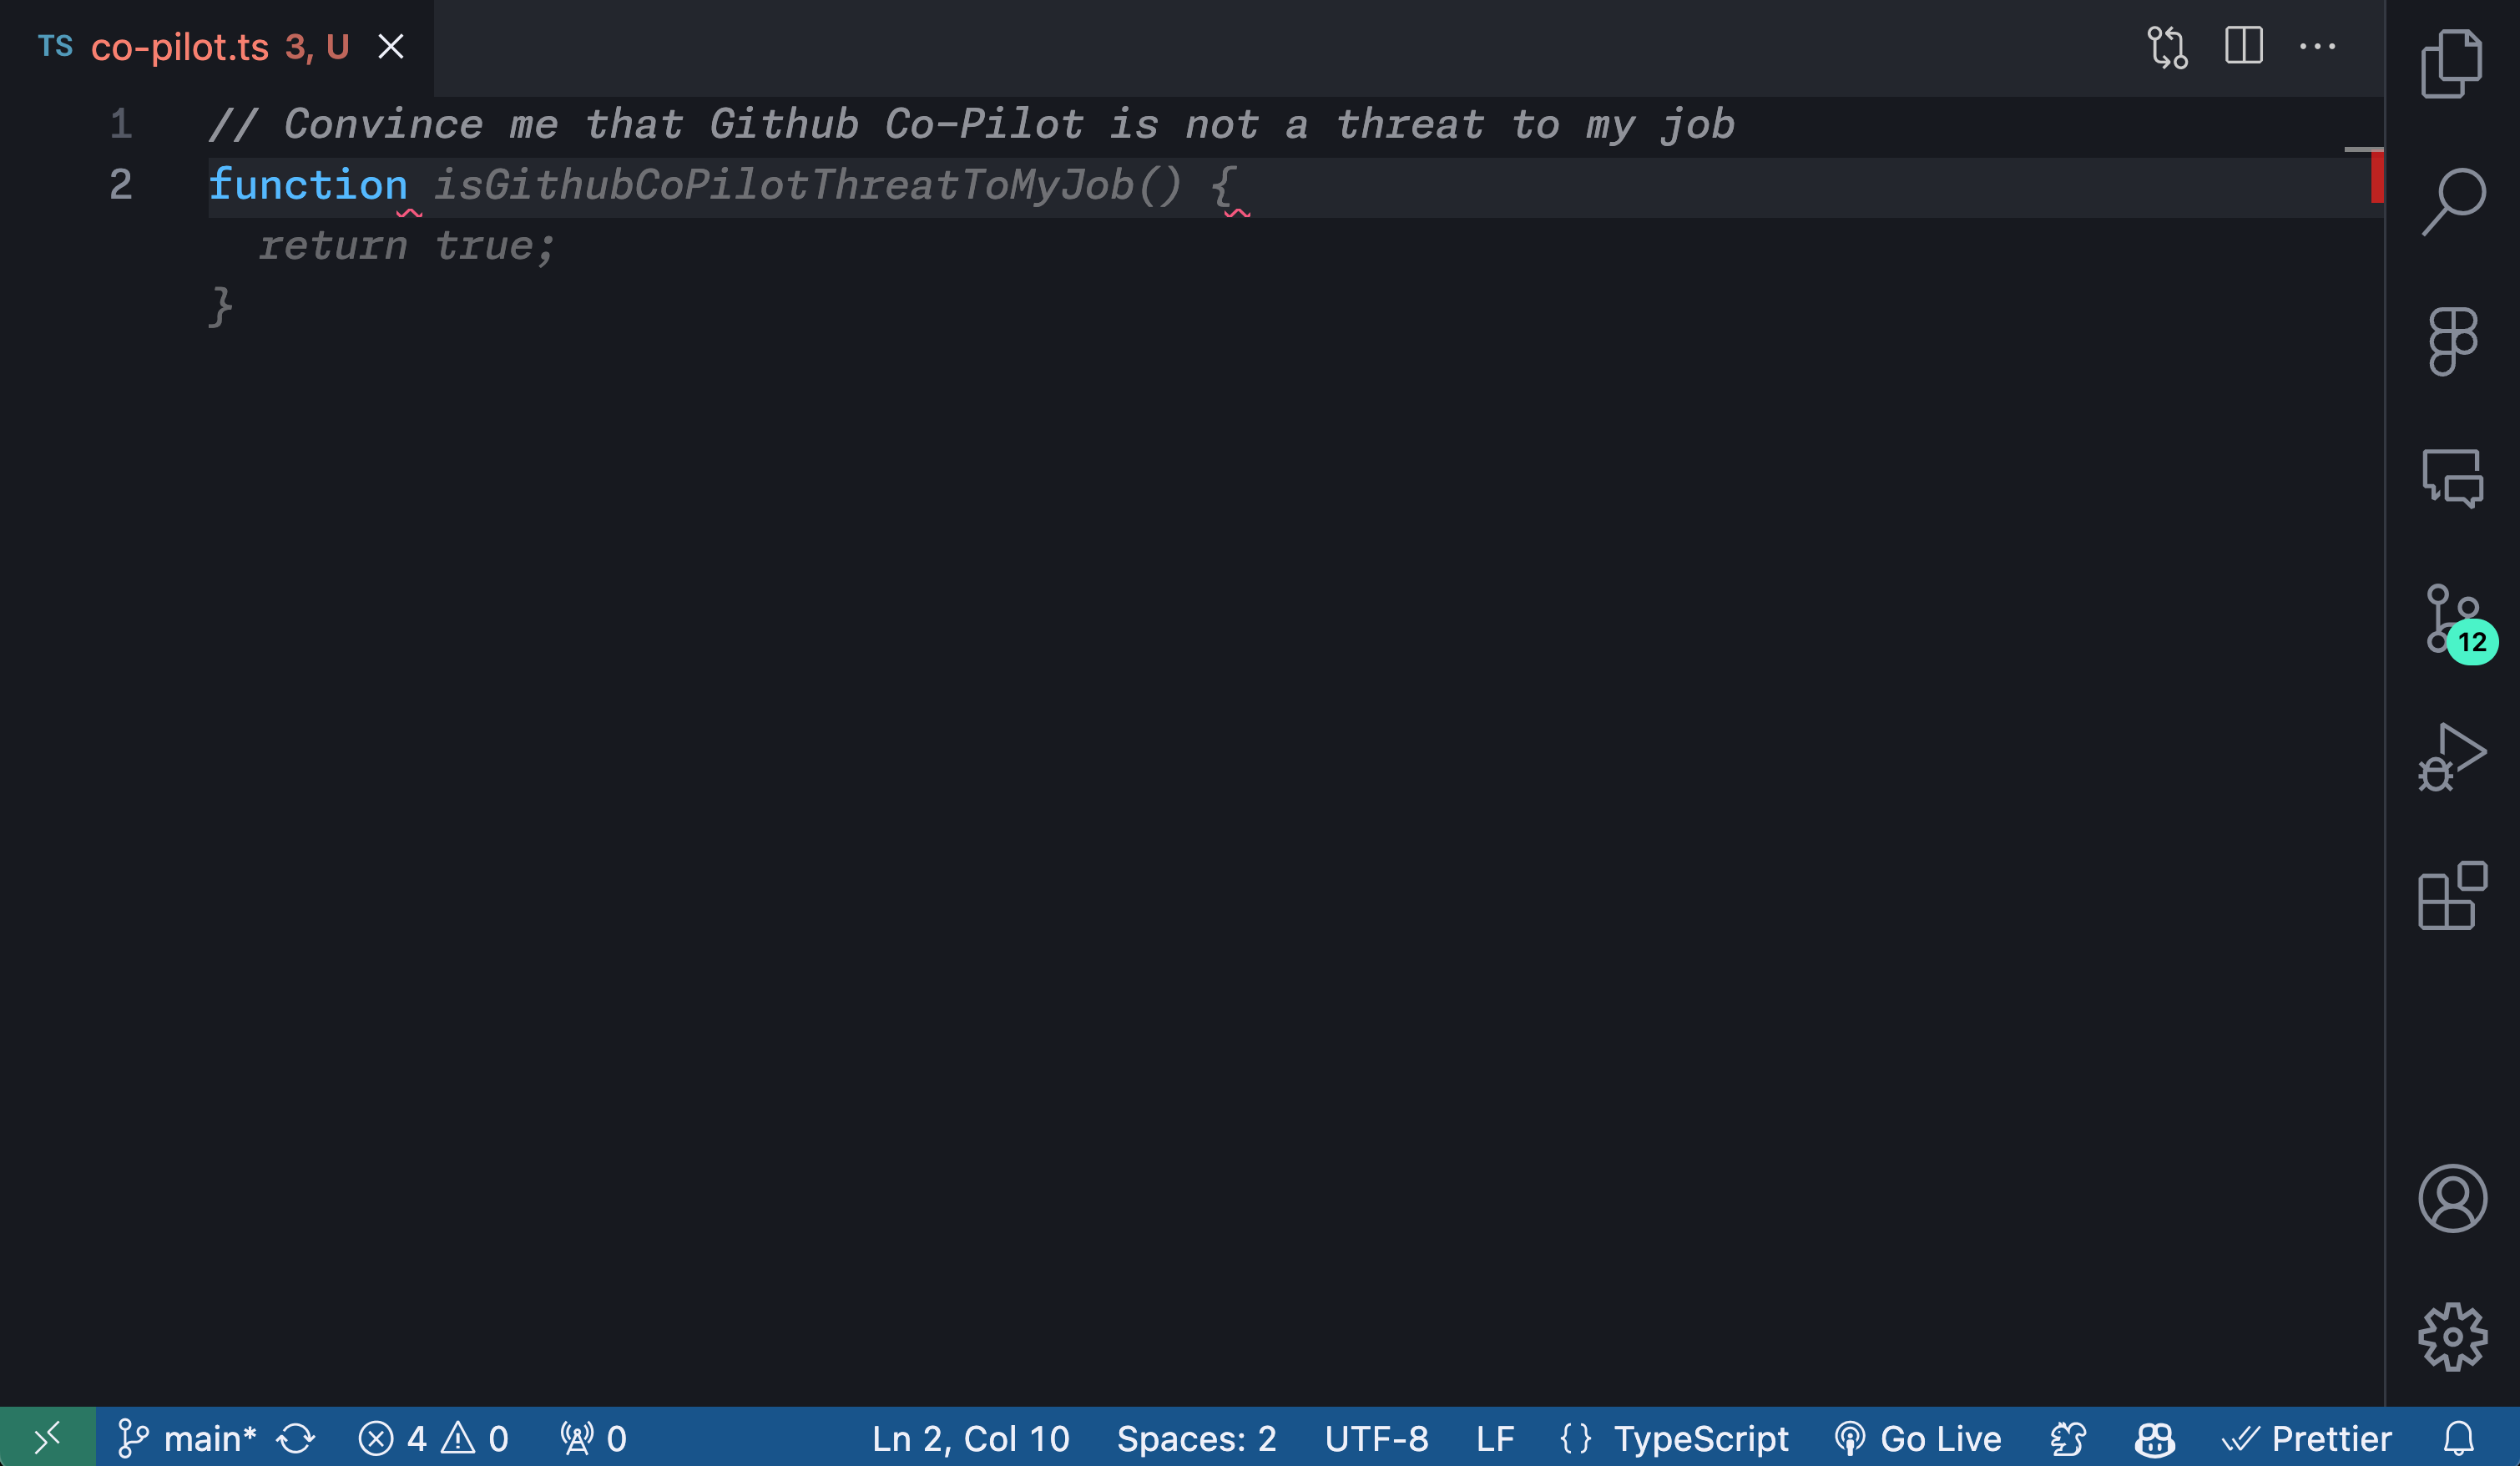 Github Co-pilot demonstrating code completion